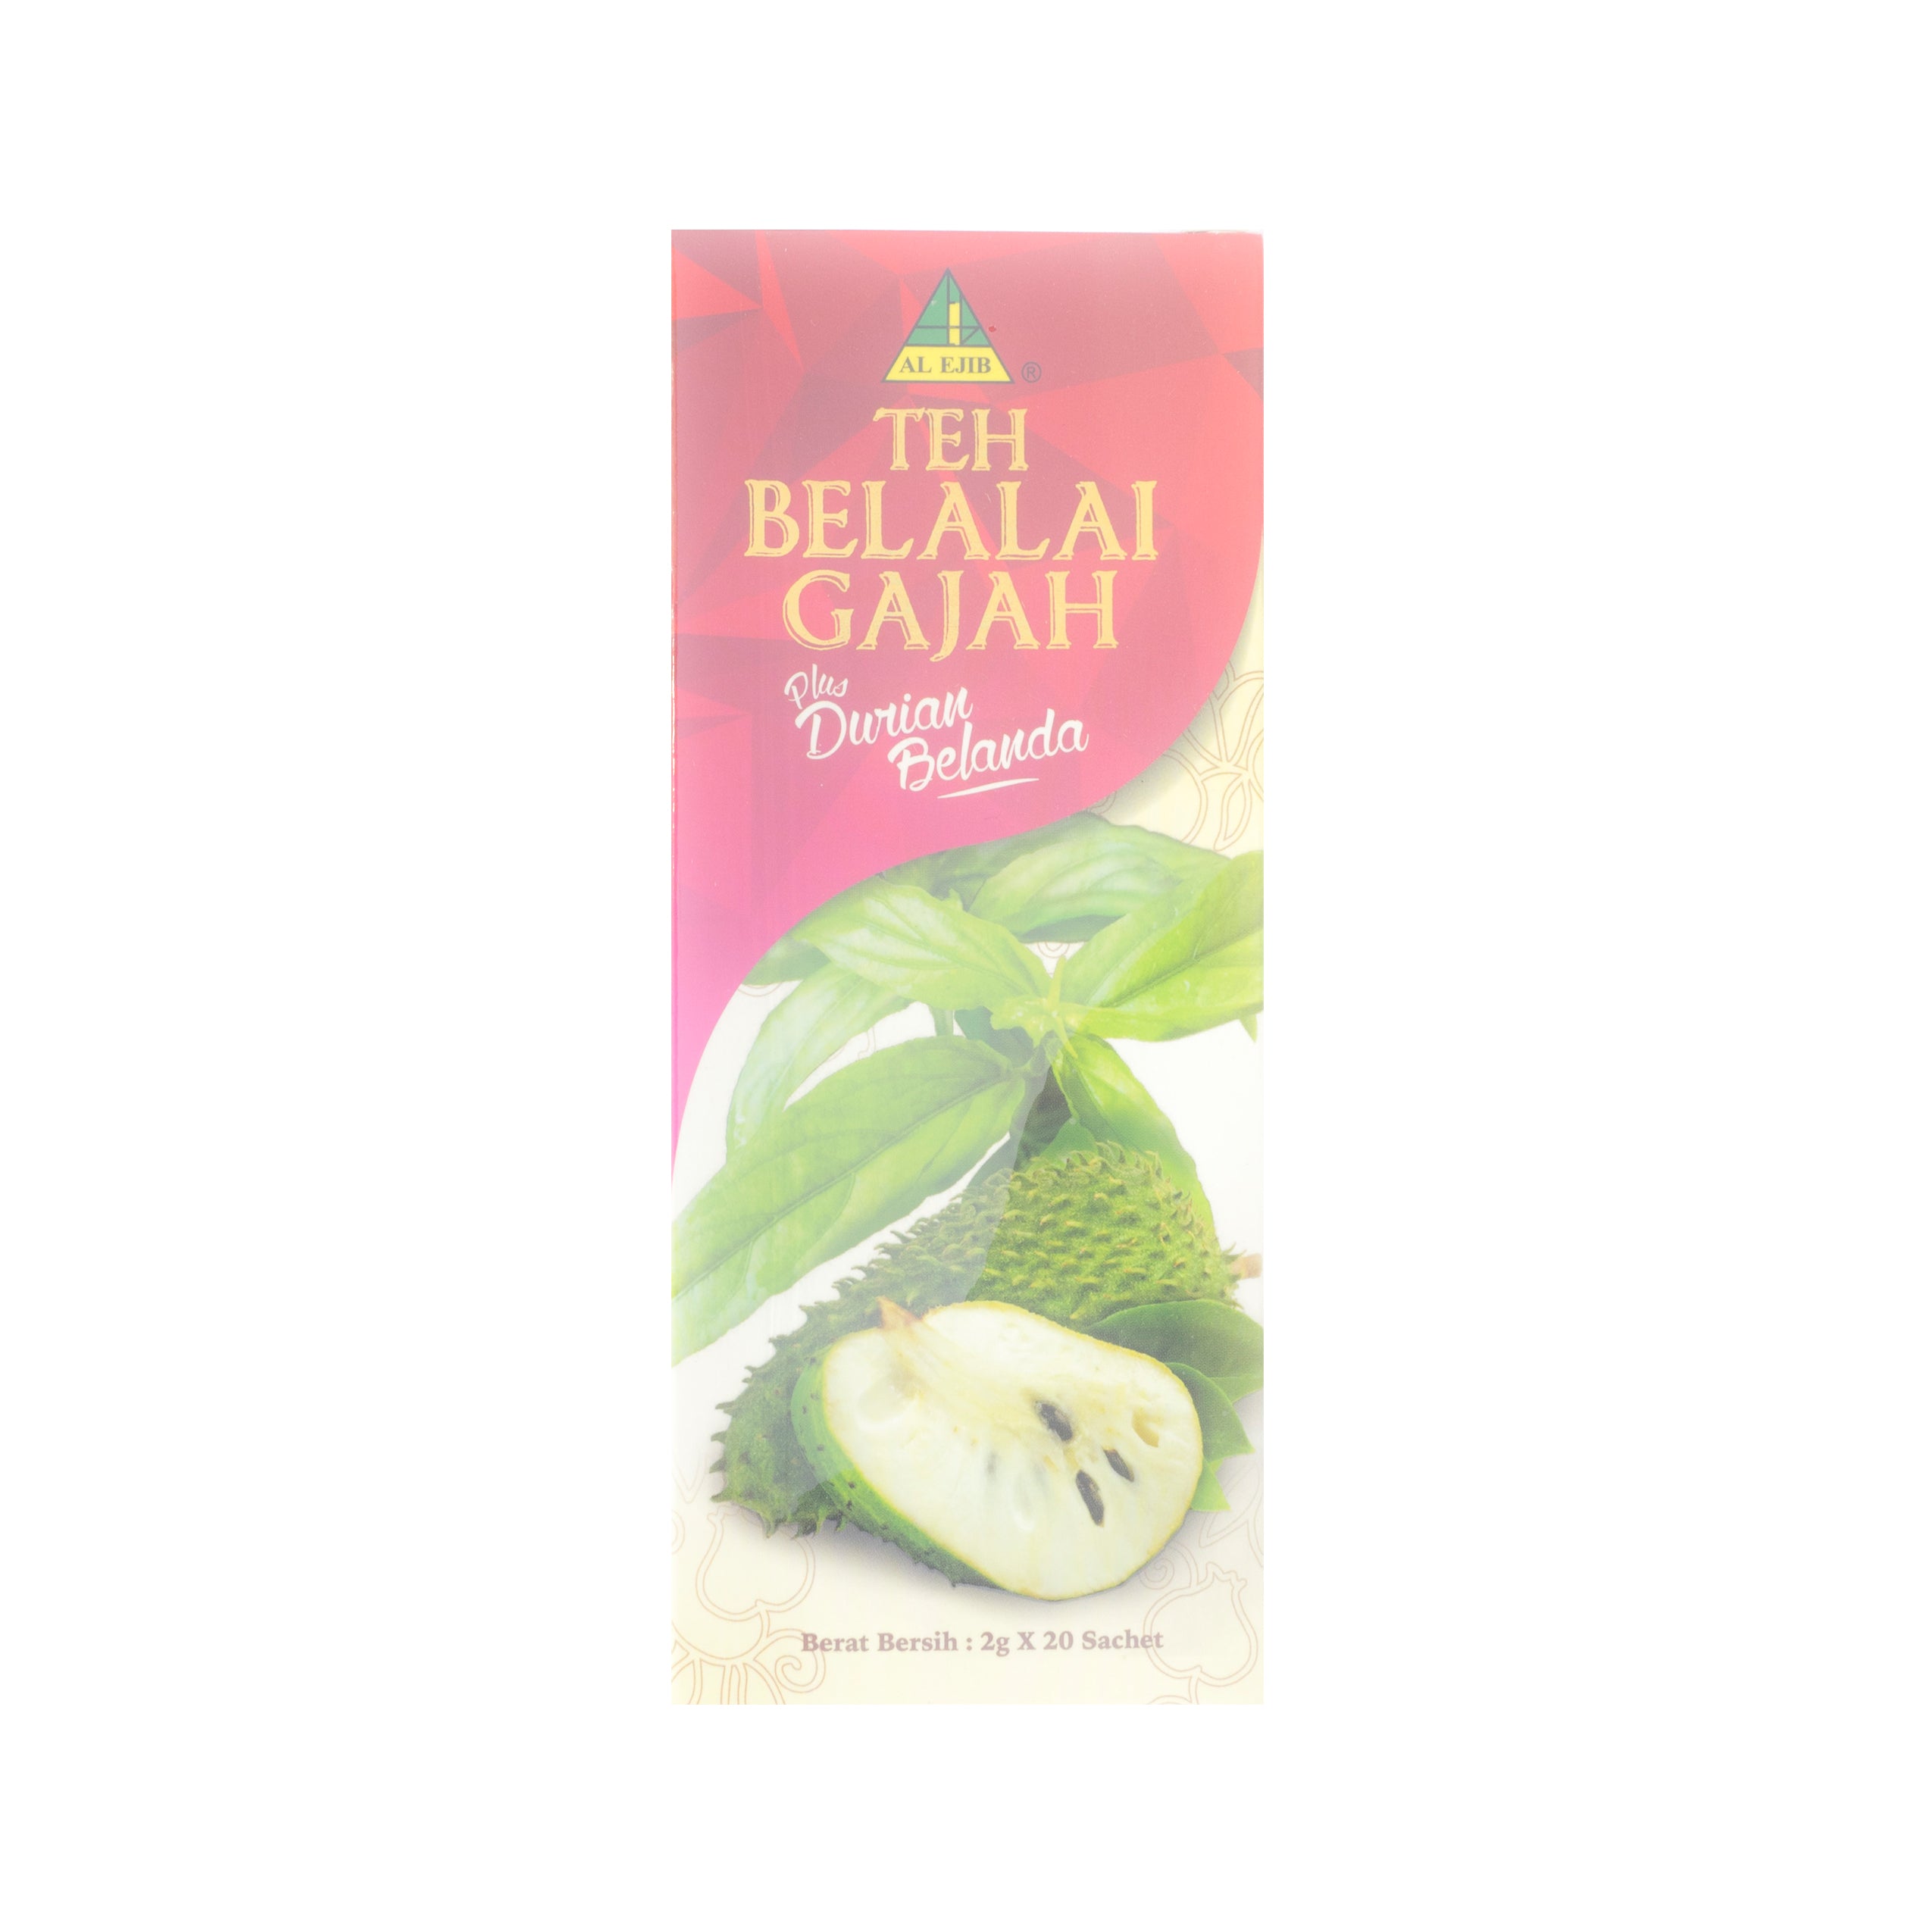 Al Ejib, Teh Belalai Gajah Plus Durian Belanda, 20 sachets x 2 g